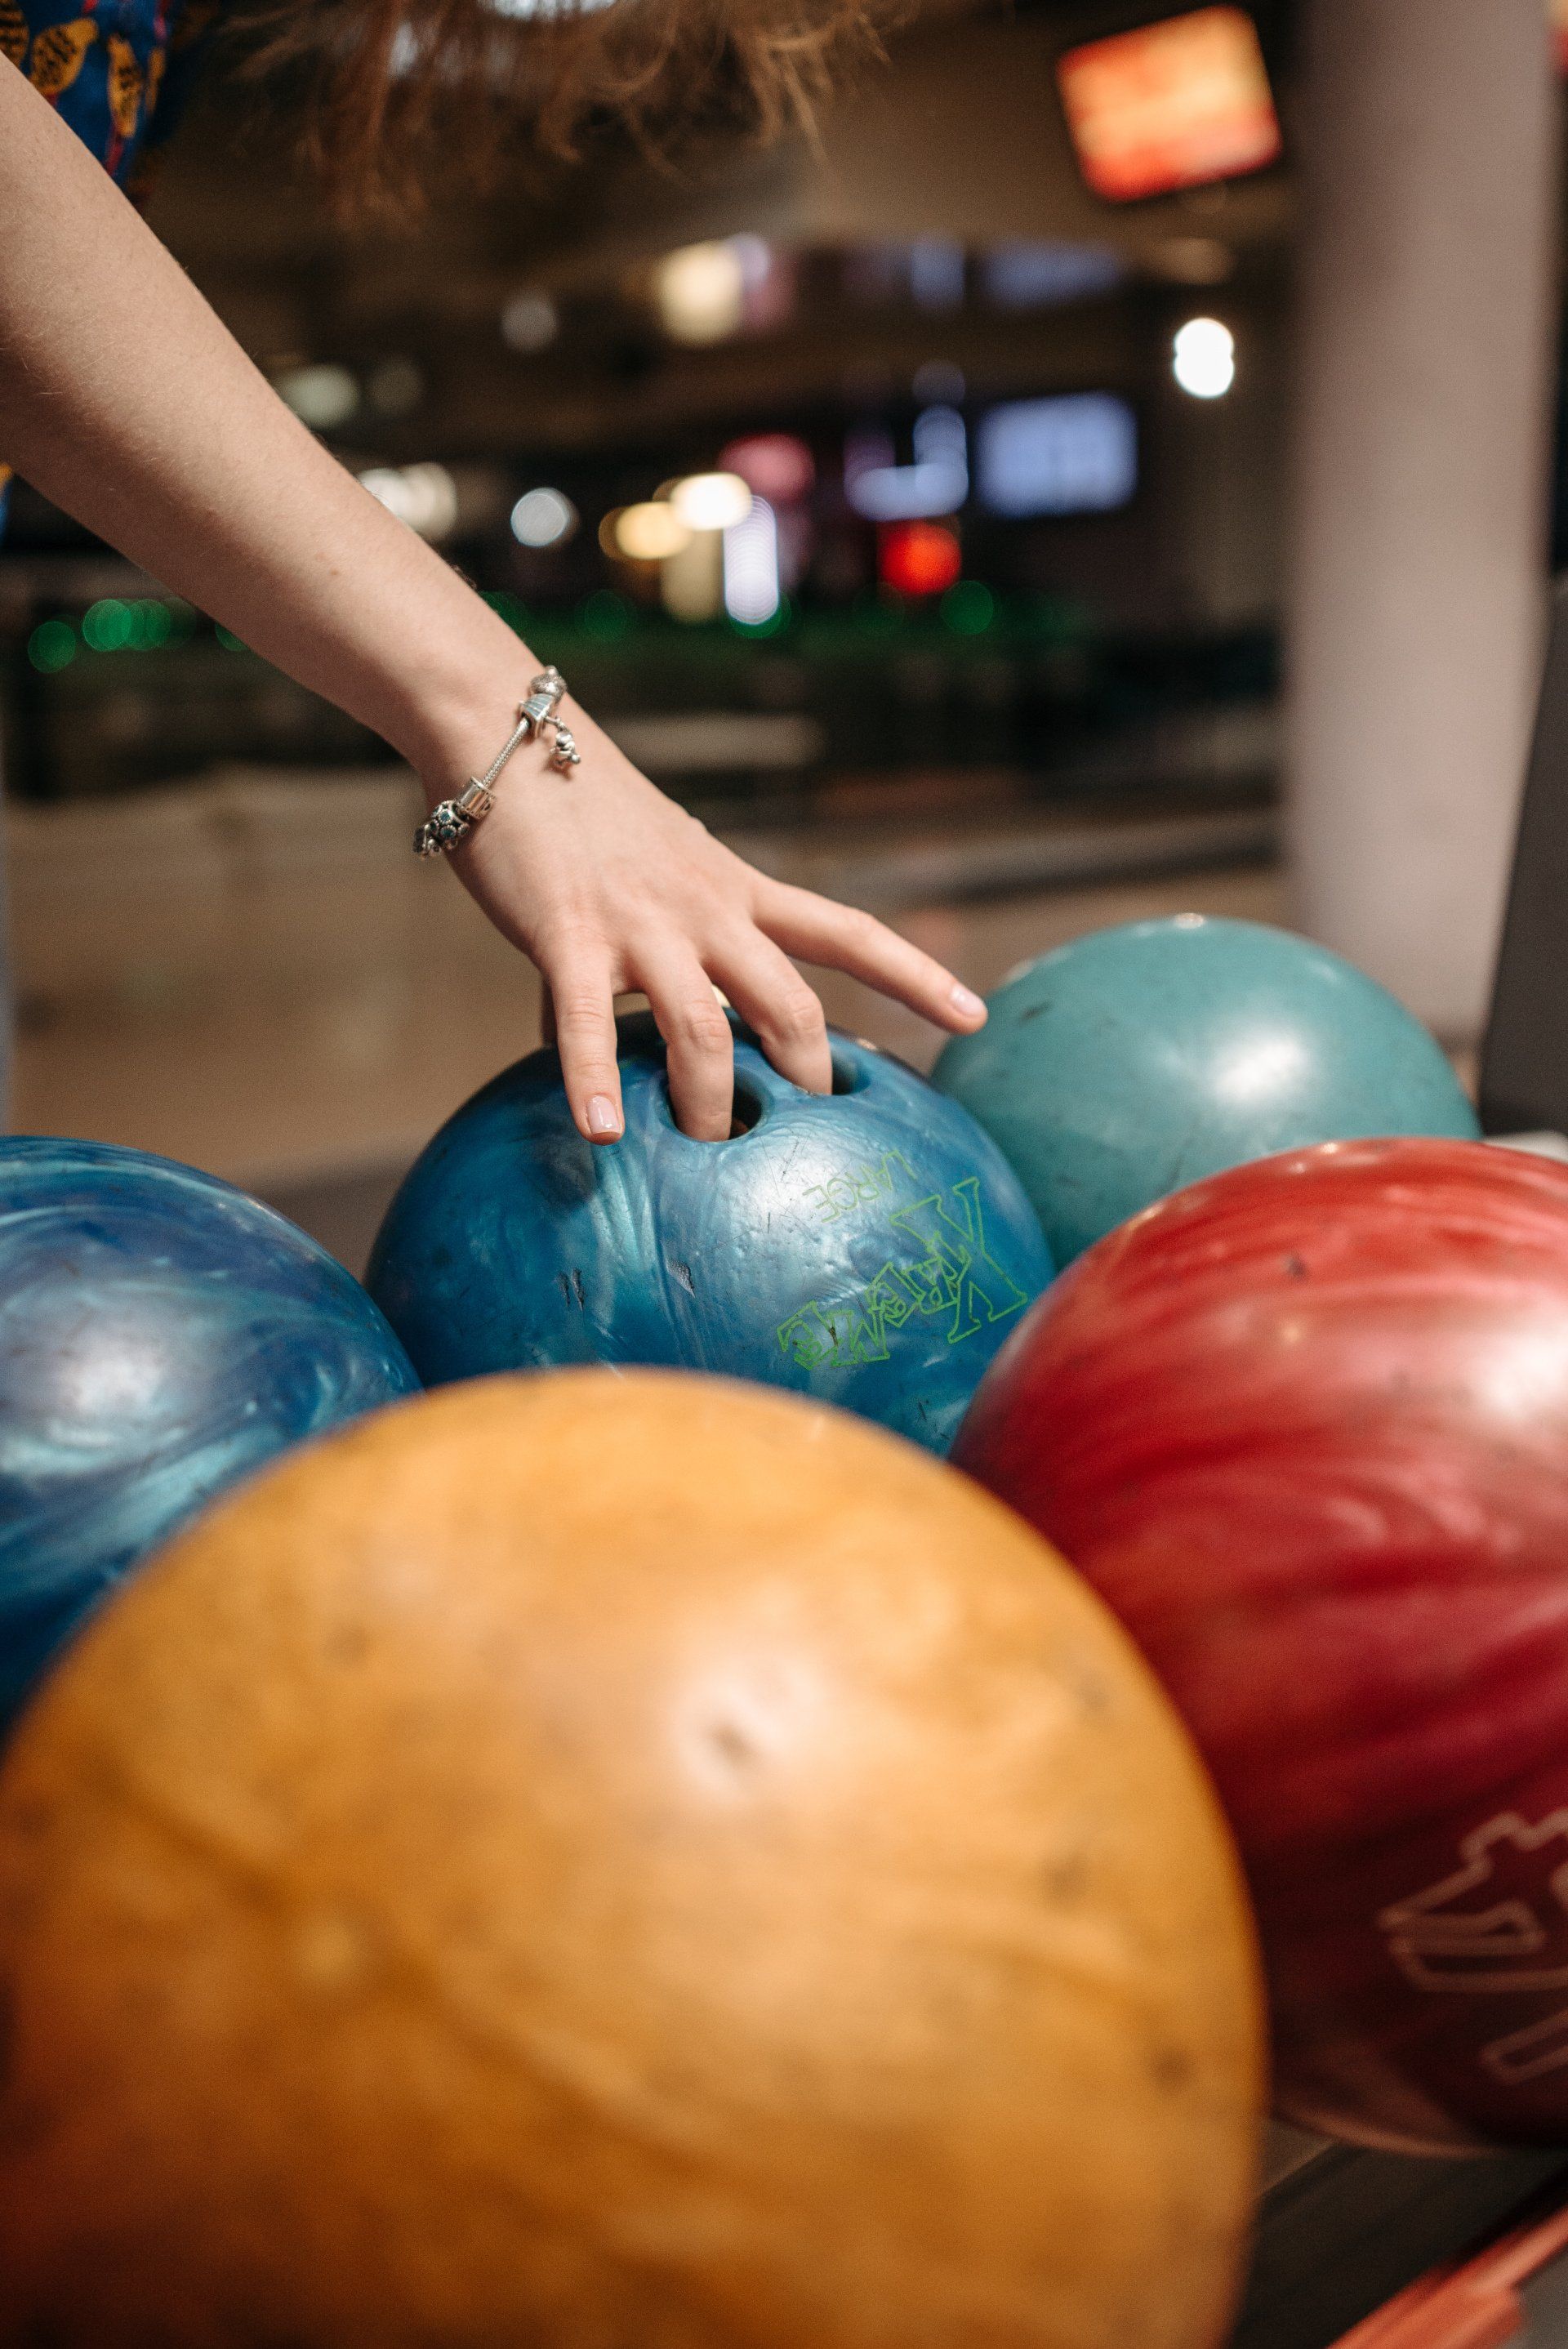 bowling-balls